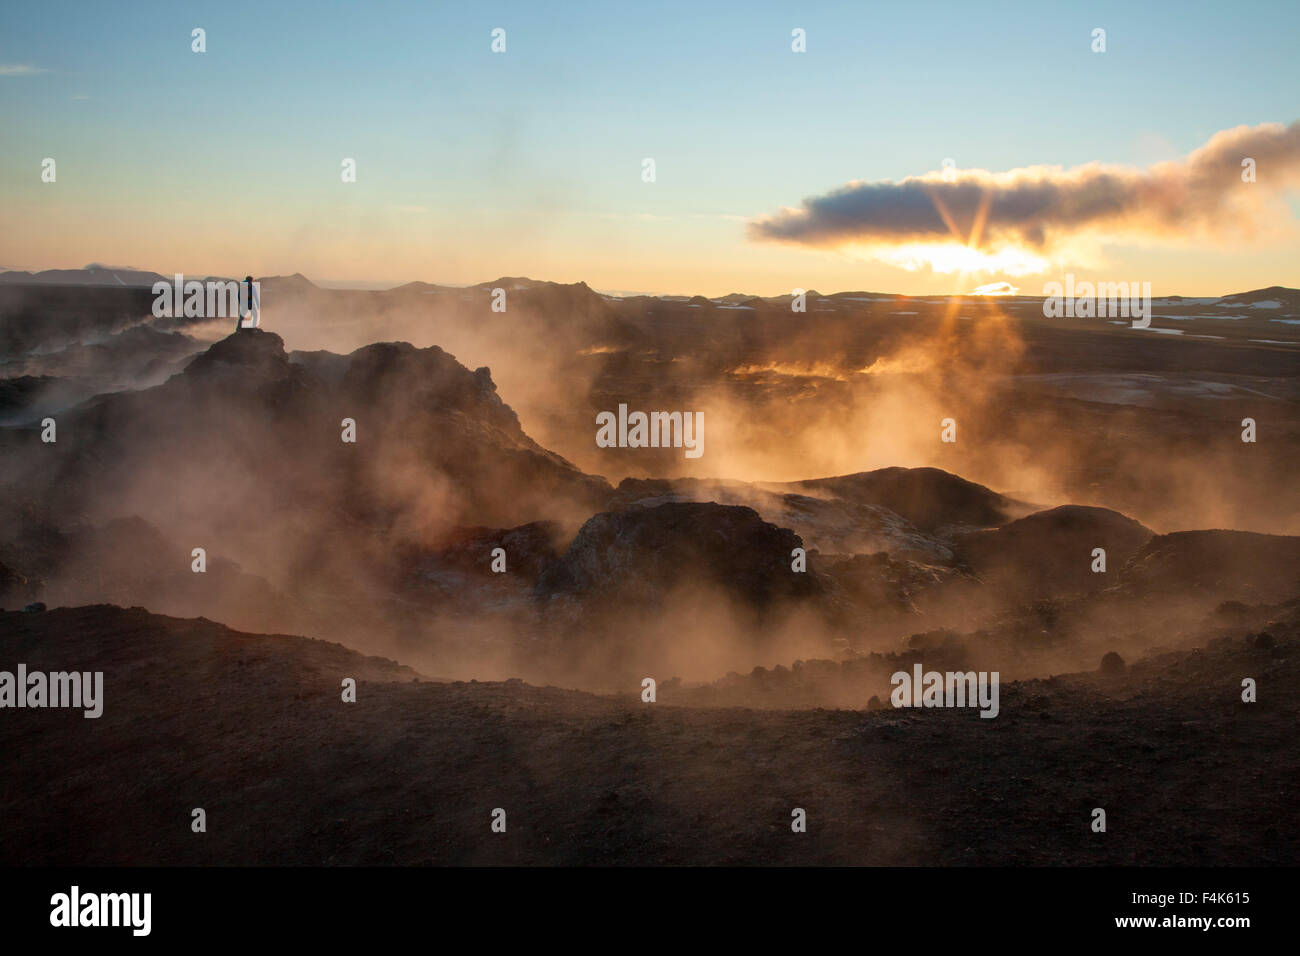 Dawn Wanderer inmitten der schwelenden Lavafeld bei Leirhnjukur, Krafla-Vulkan, Myvatn, Nordhurland Eystra, Island. Stockfoto